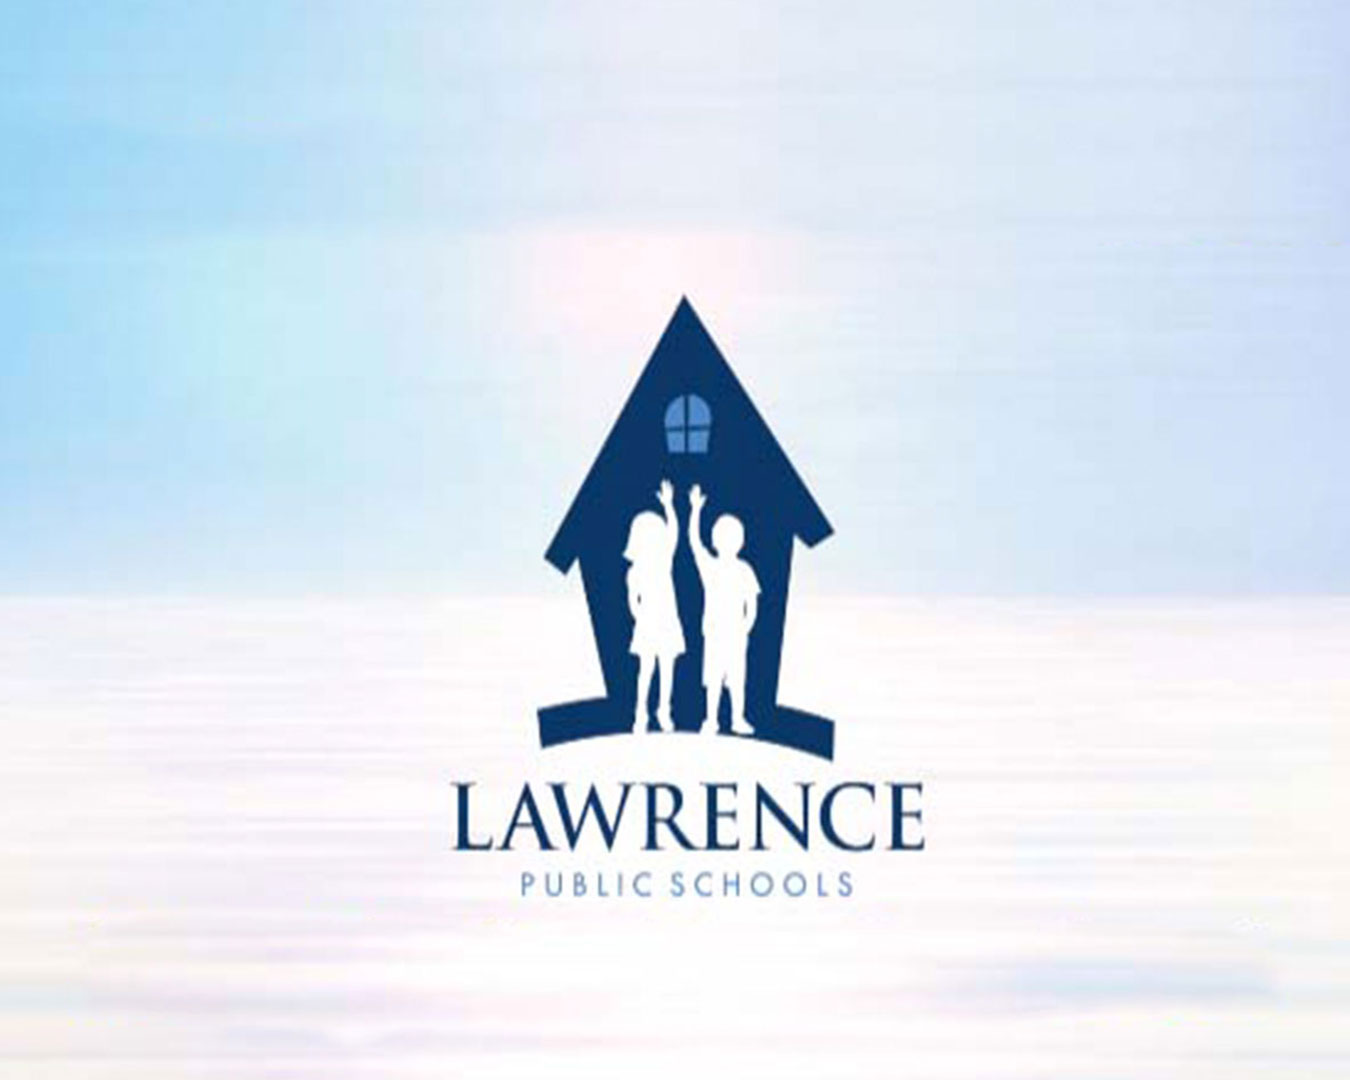 Lawrence Public Schools logotips